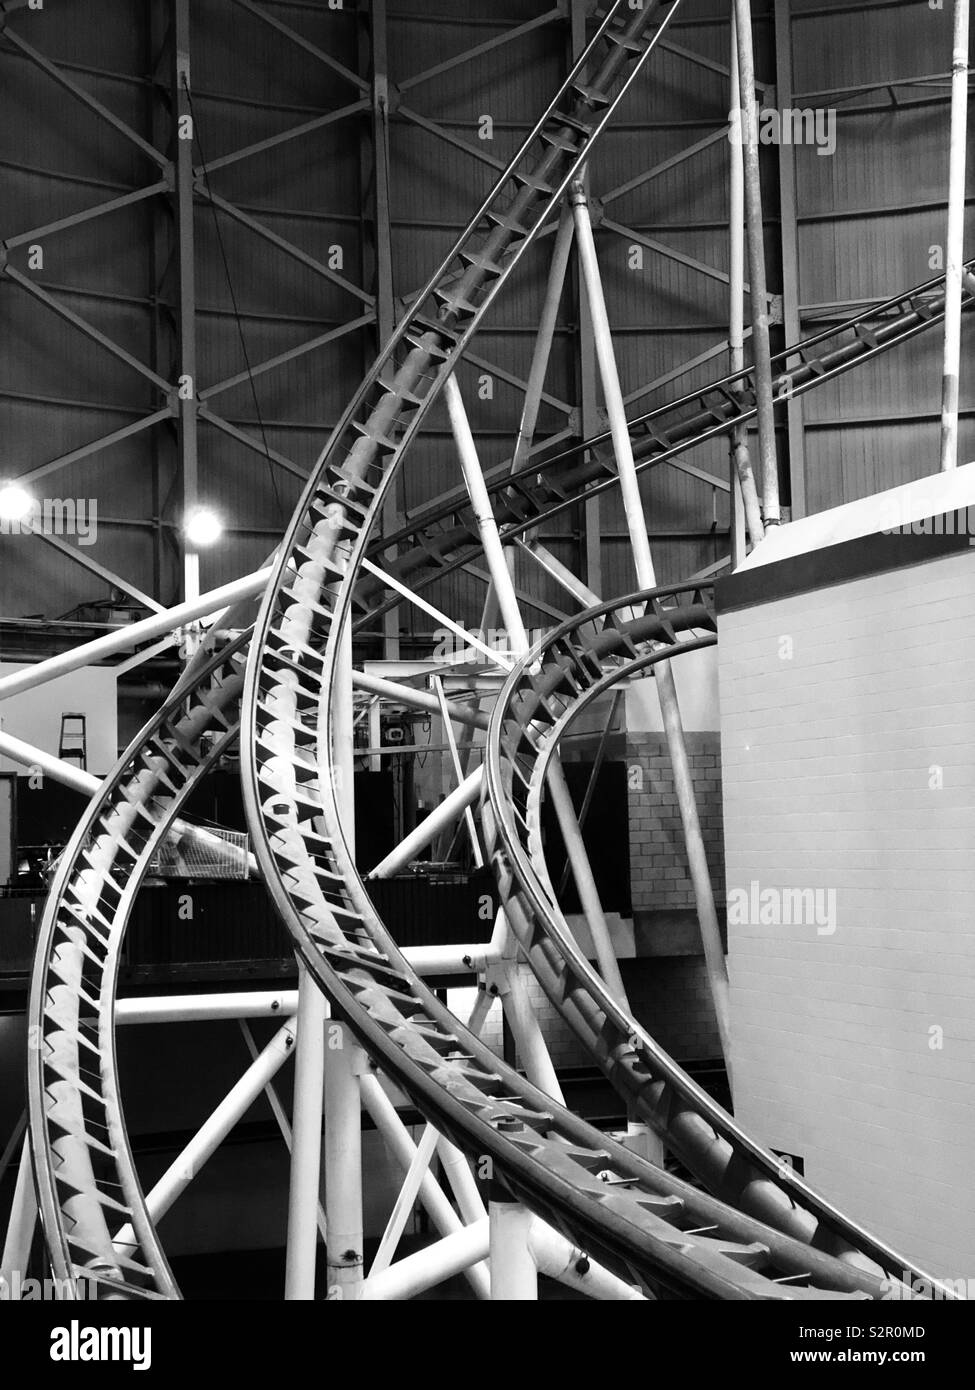 Mindbender roller coaster at Galaxyland, West Edmonton Mall - indoor amusement park Stock Photo